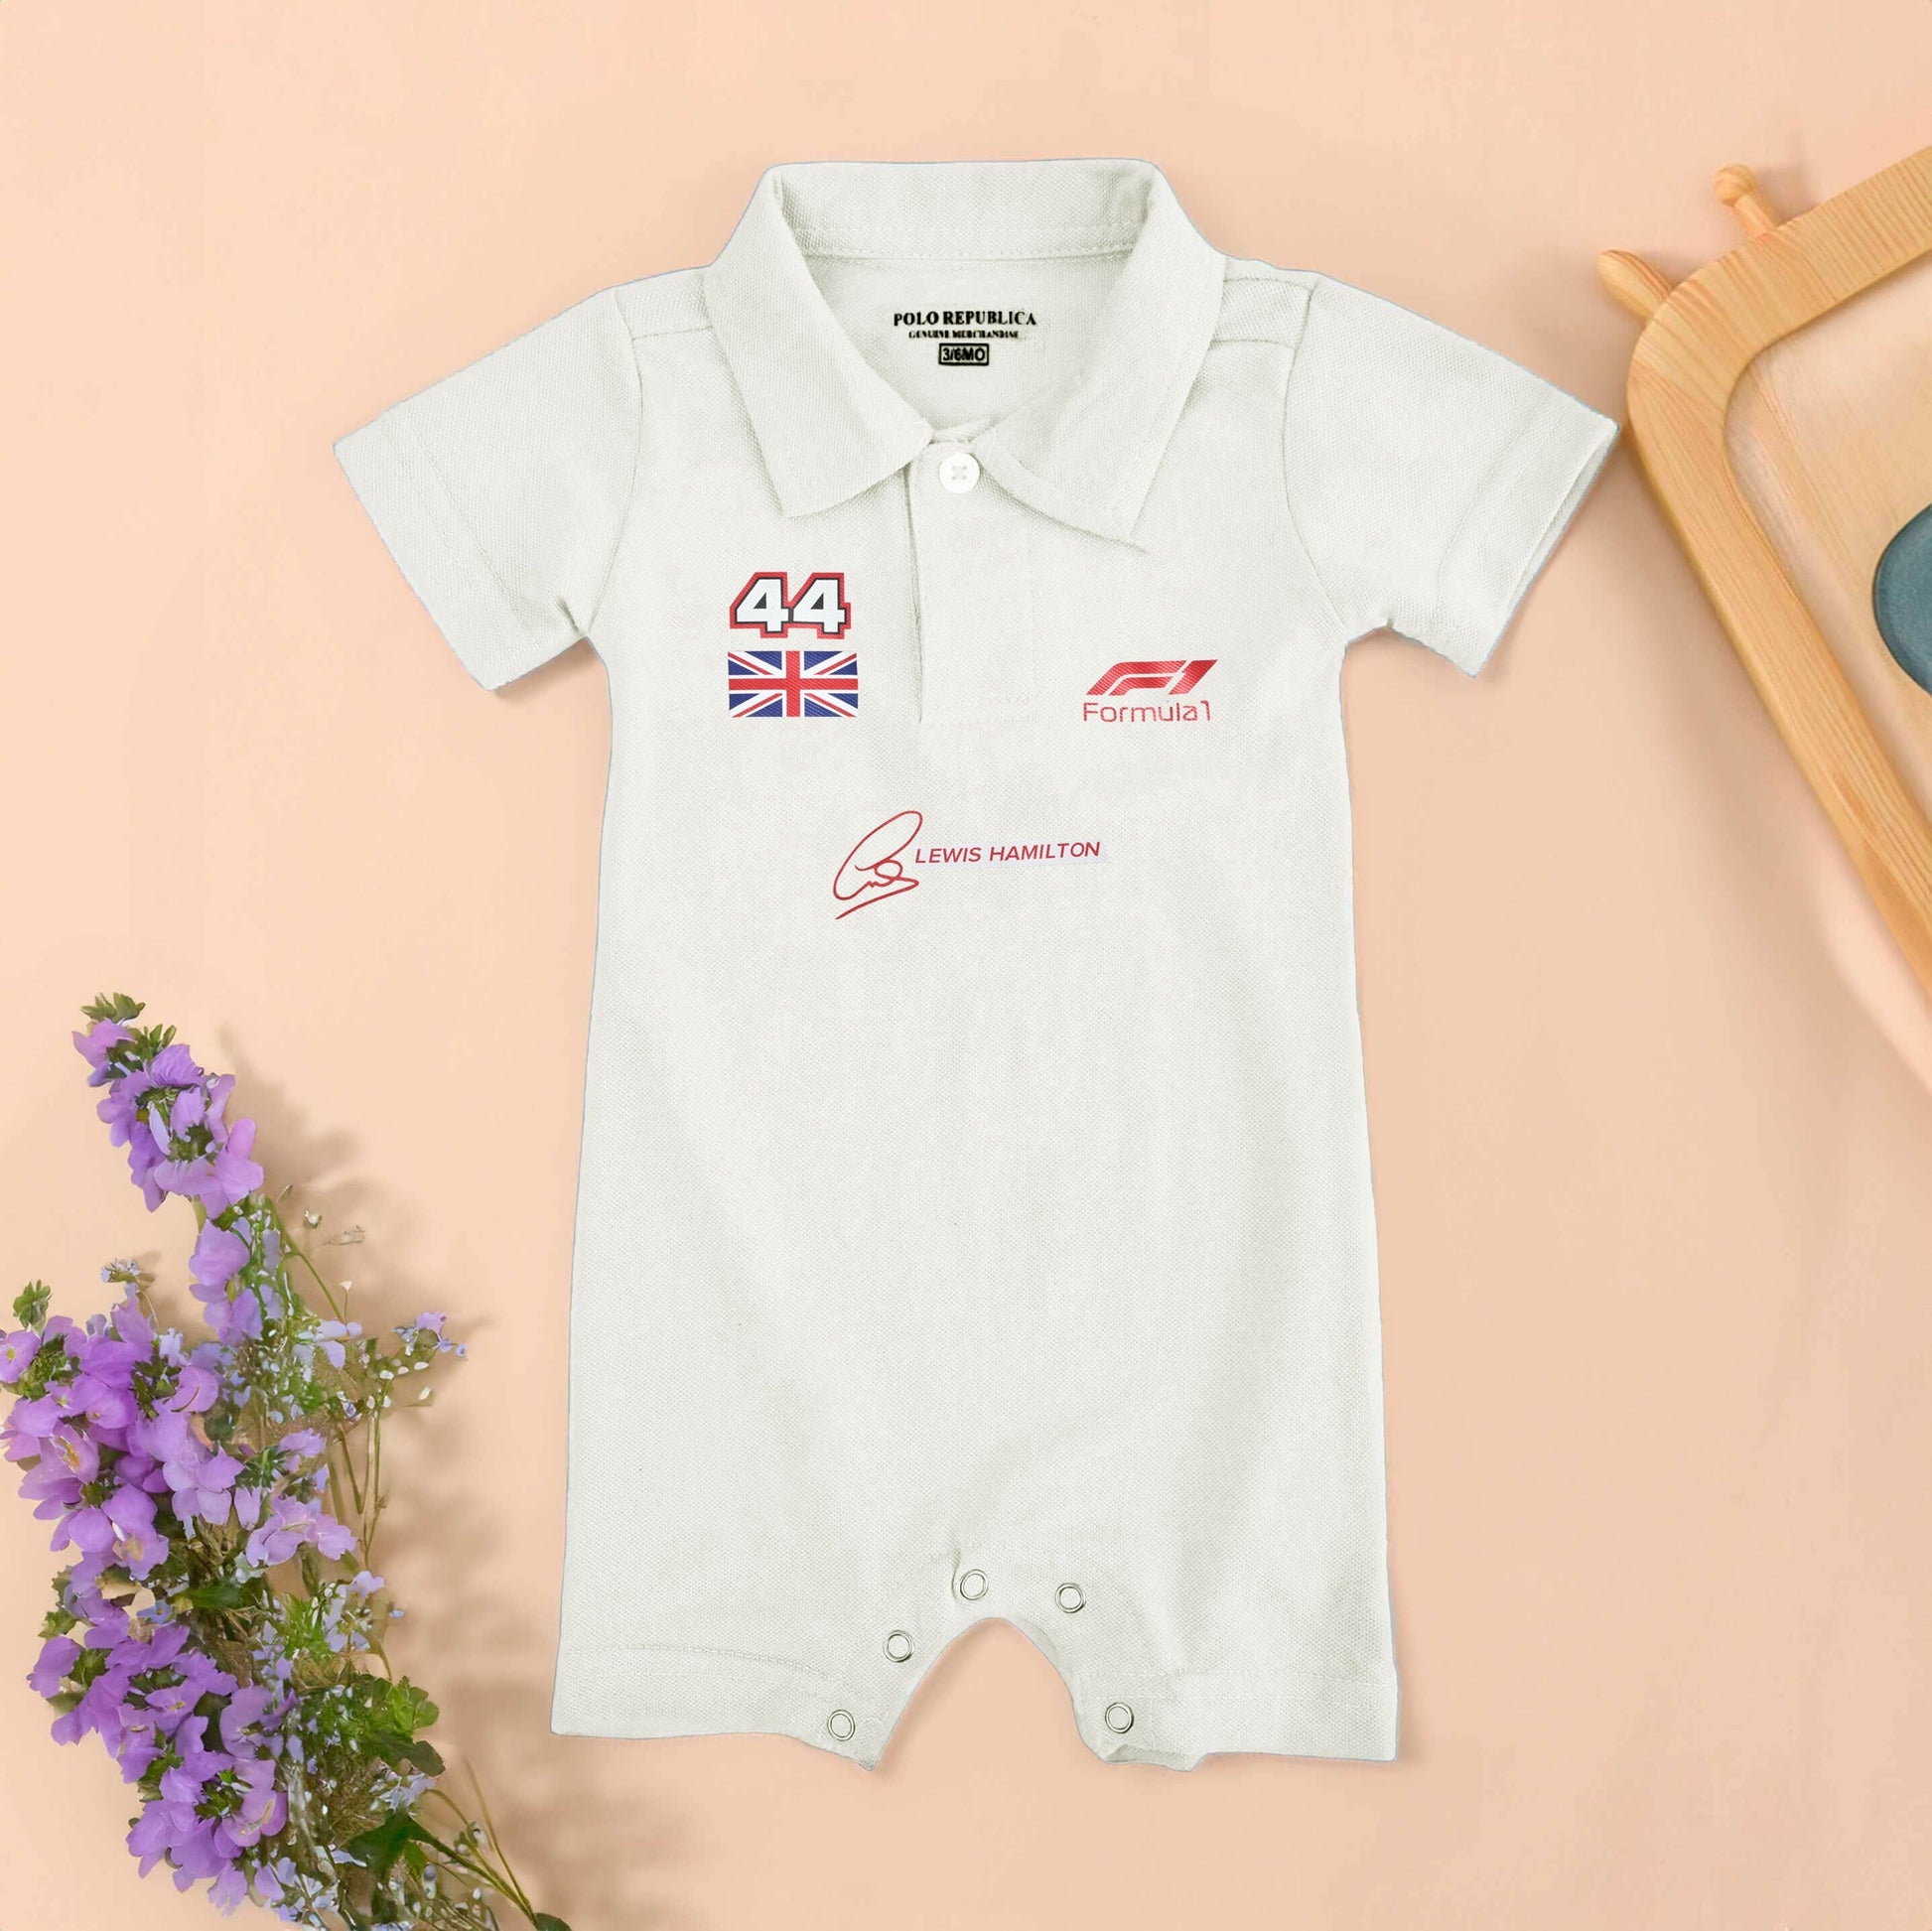 Polo Republica PakWheels Formula 1 Printed Baby Romper Romper Polo Republica Off White 0-3 Months 